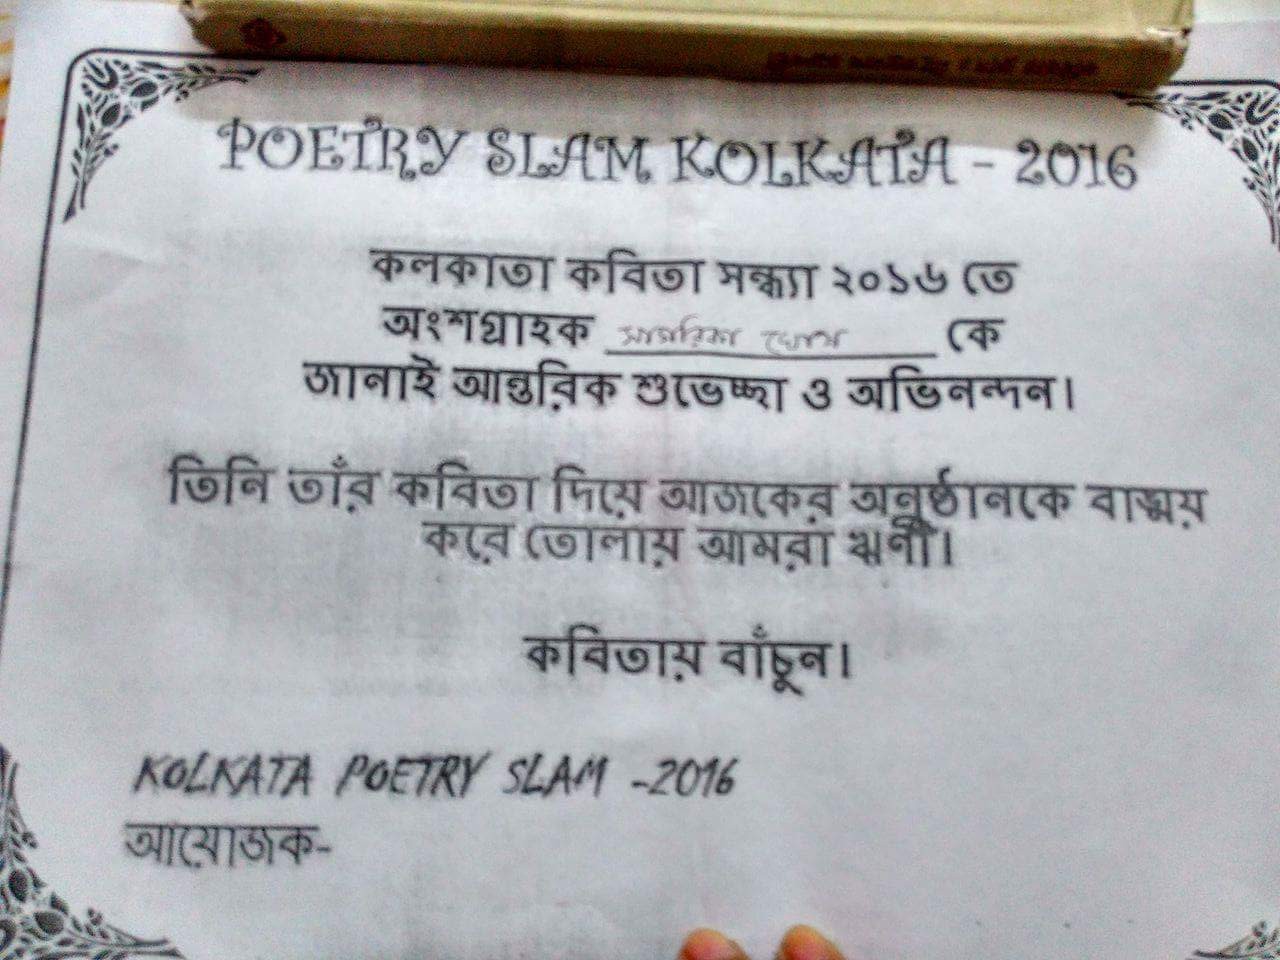 First Memorial Award to the winner from Kolkata Bengali Poetry Slam